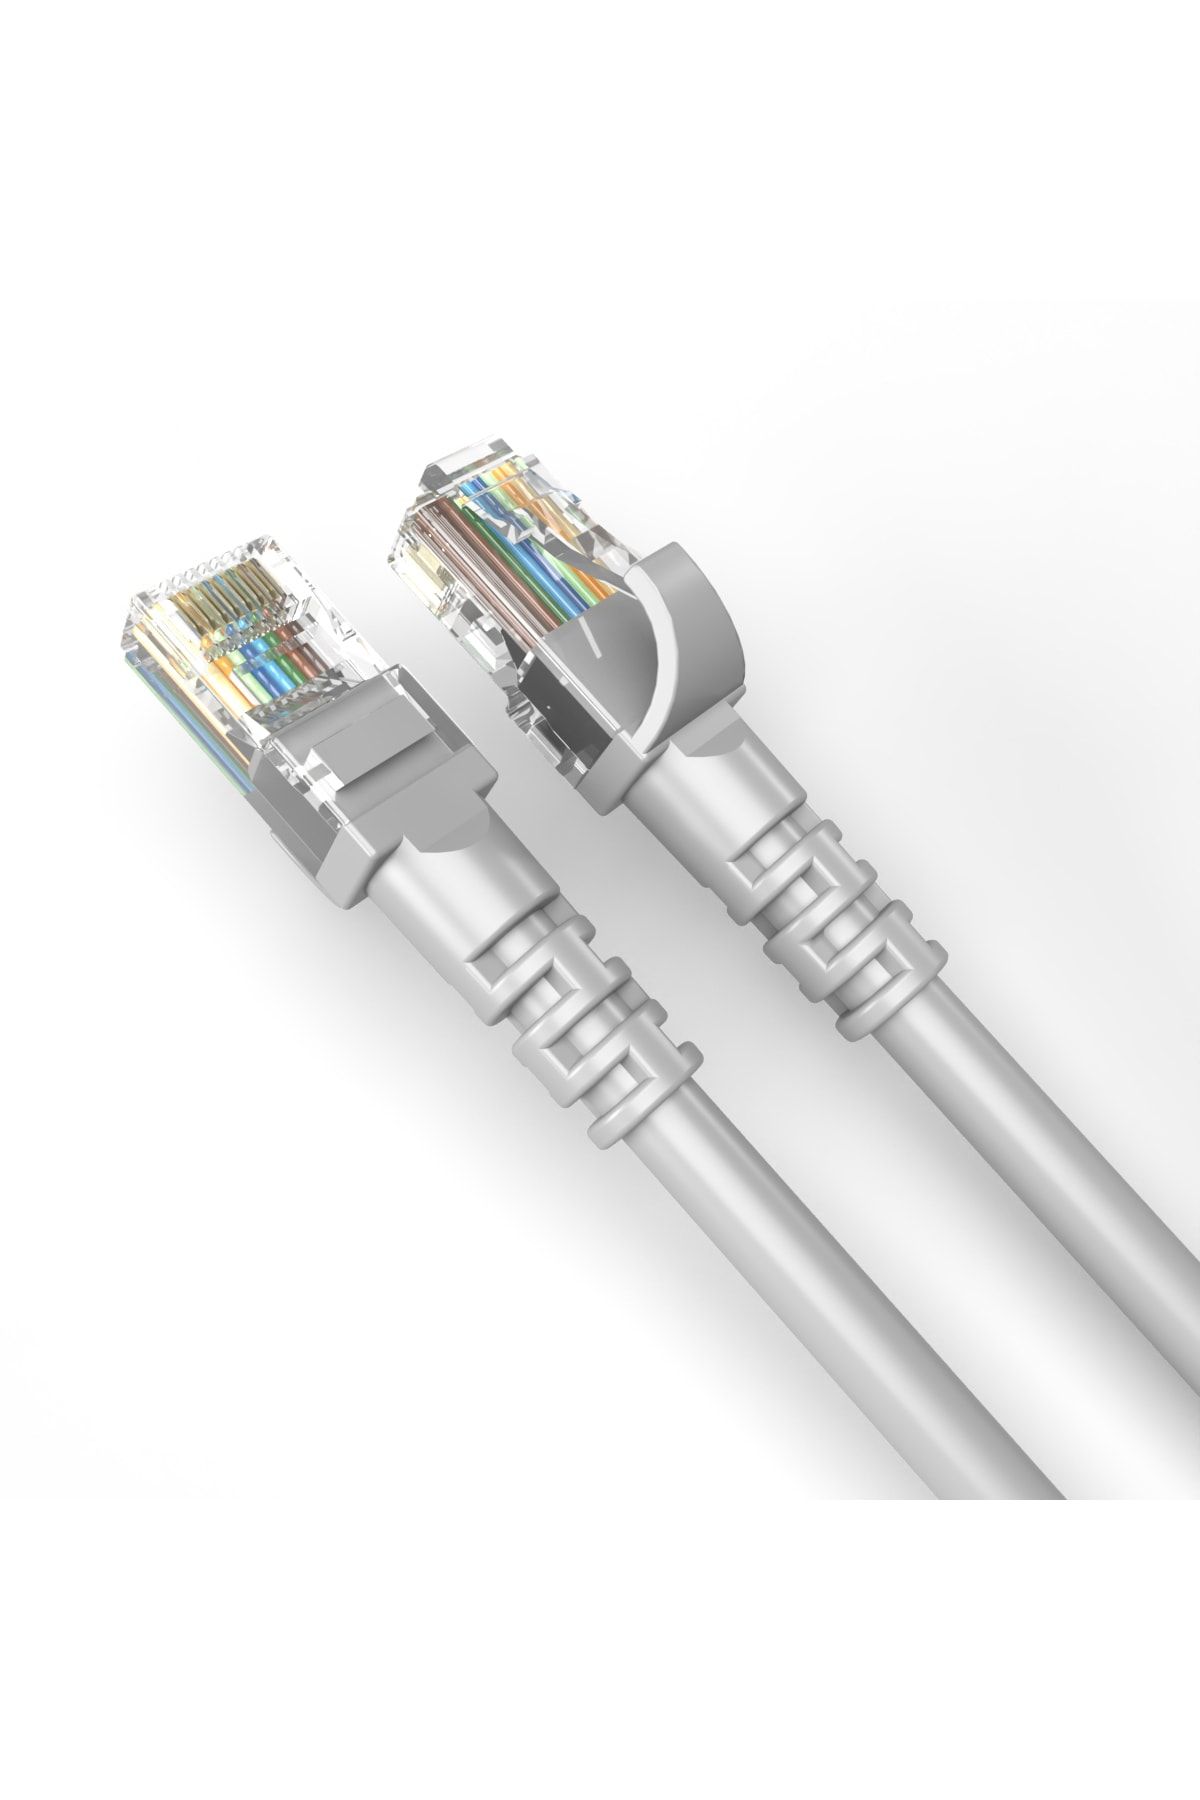 DERKAB 10 Metre Cat6 Network-Ağ-Ethernet Kablosu